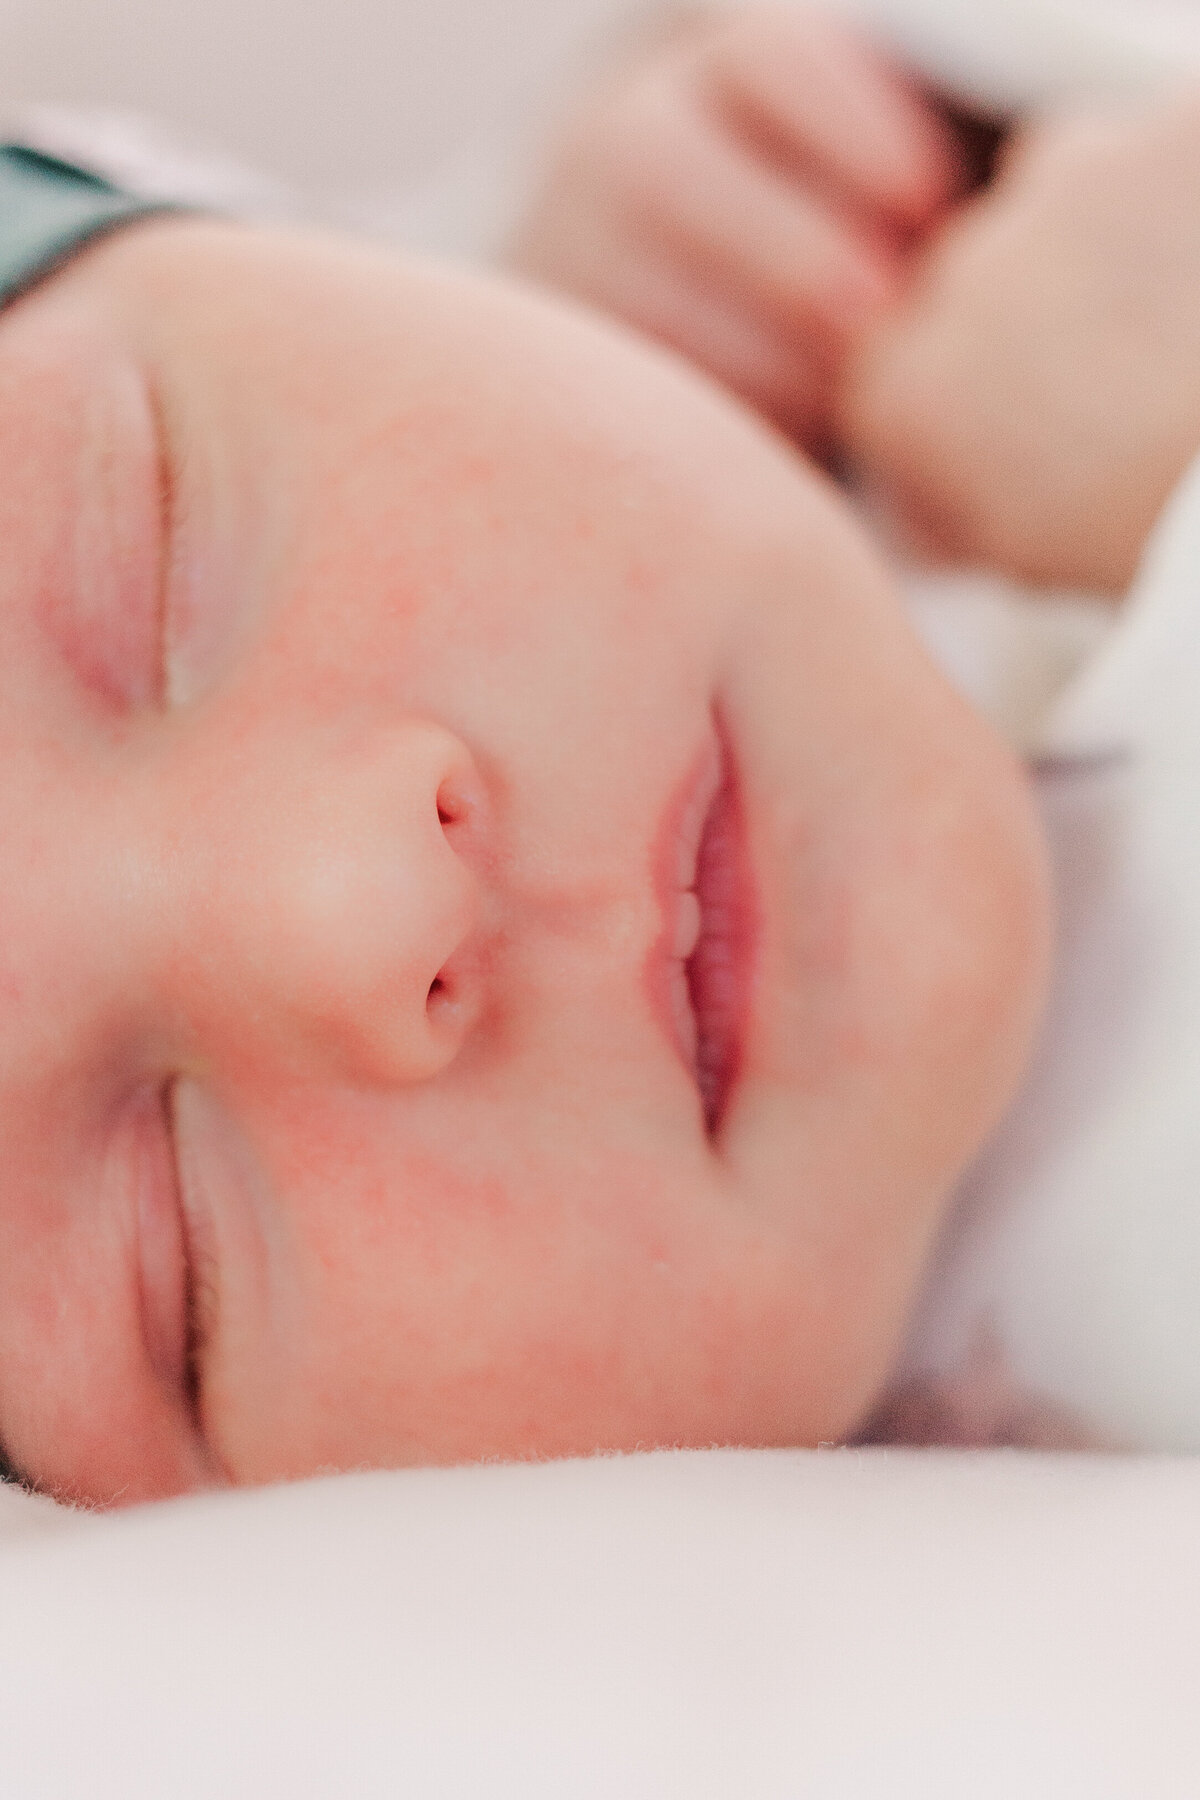 close up of face of sleeping newborn baby